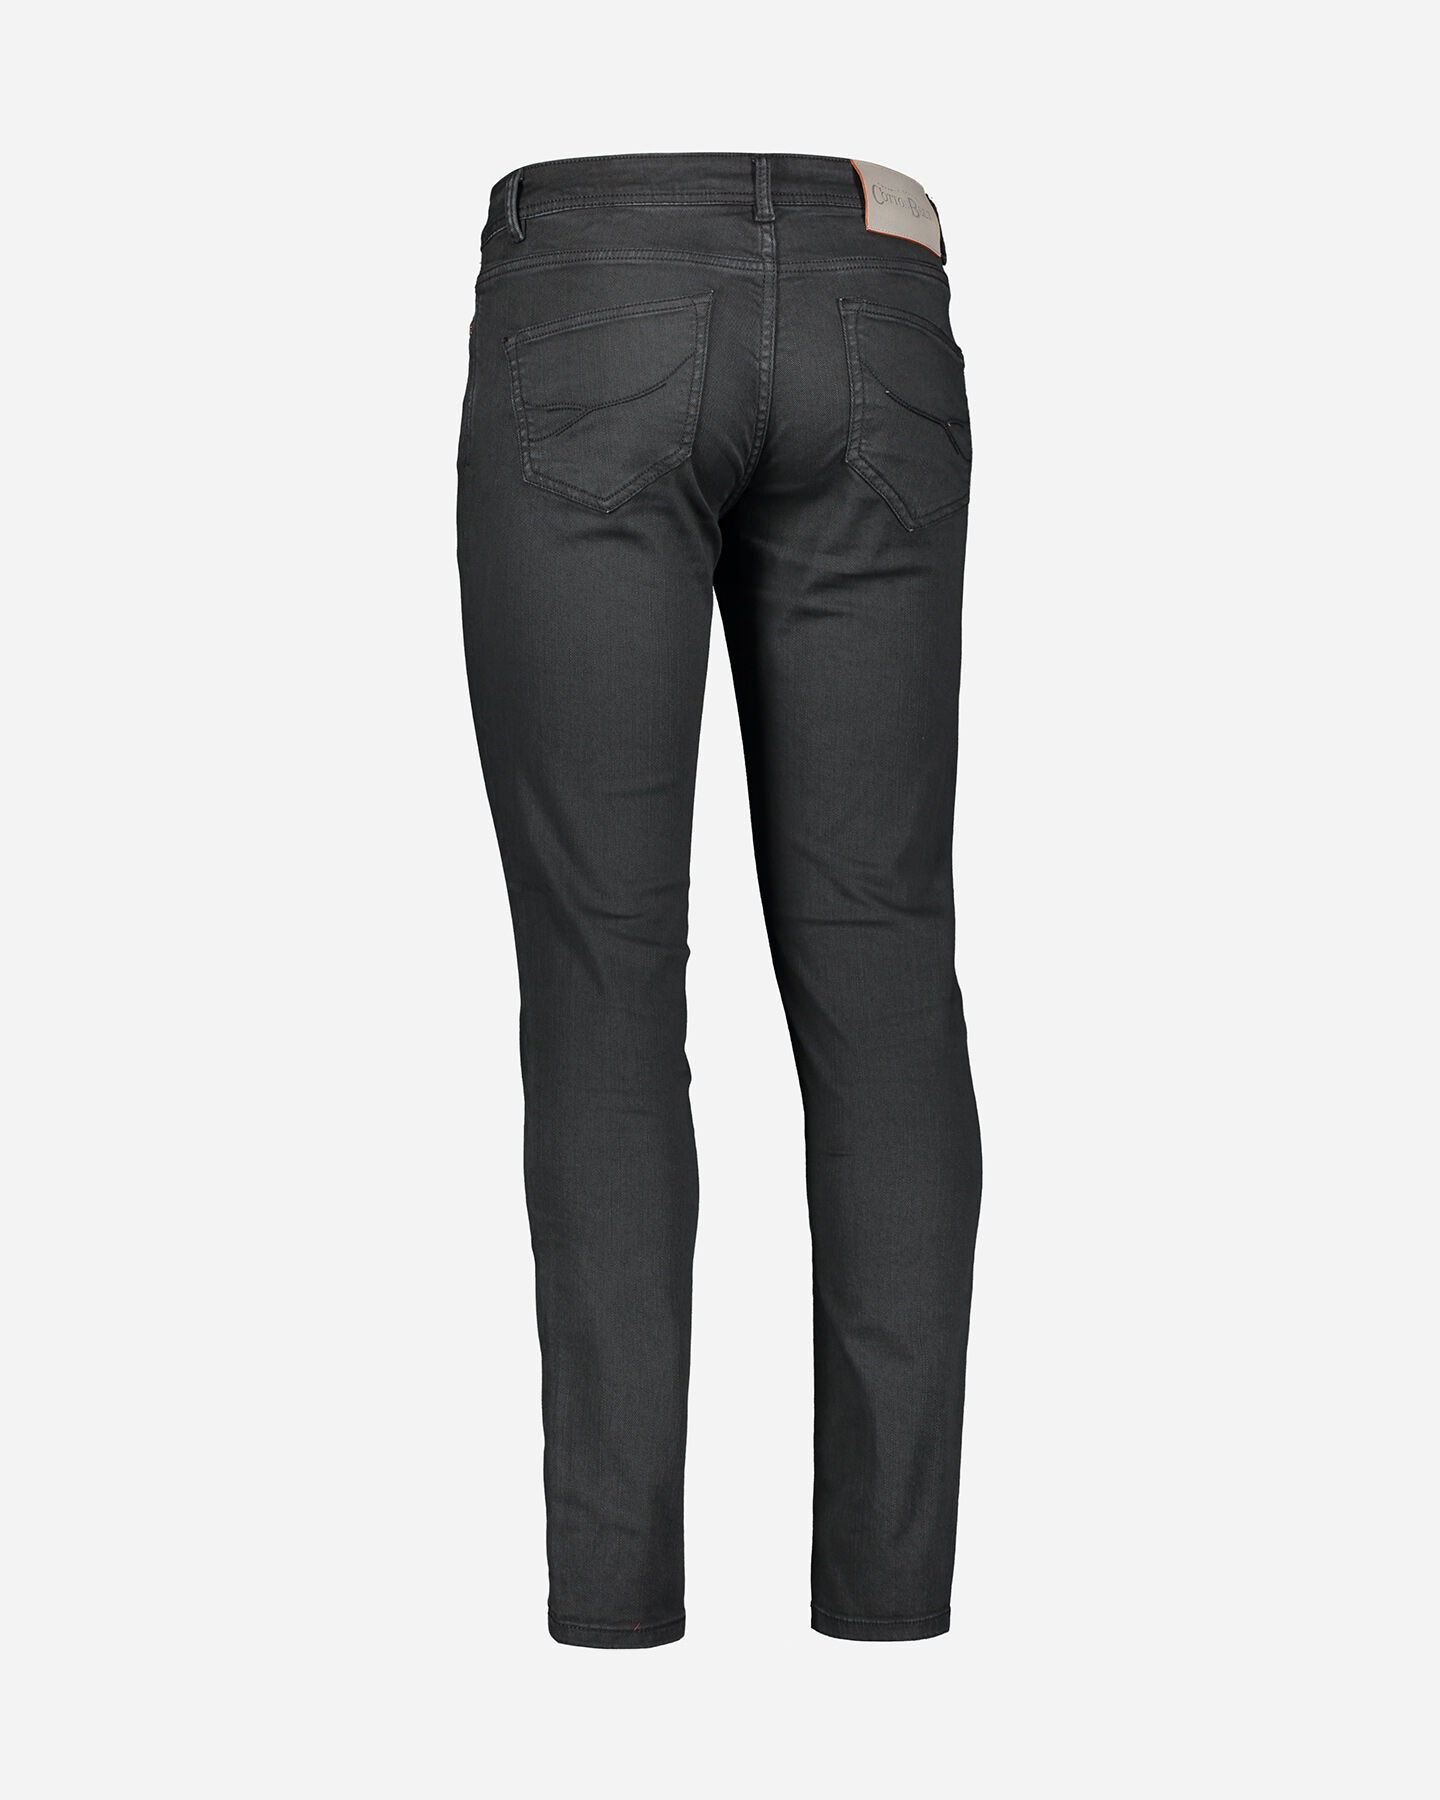  Jeans COTTON BELT 5T HAMILTON SLIM M S4070900|52|30 scatto 6